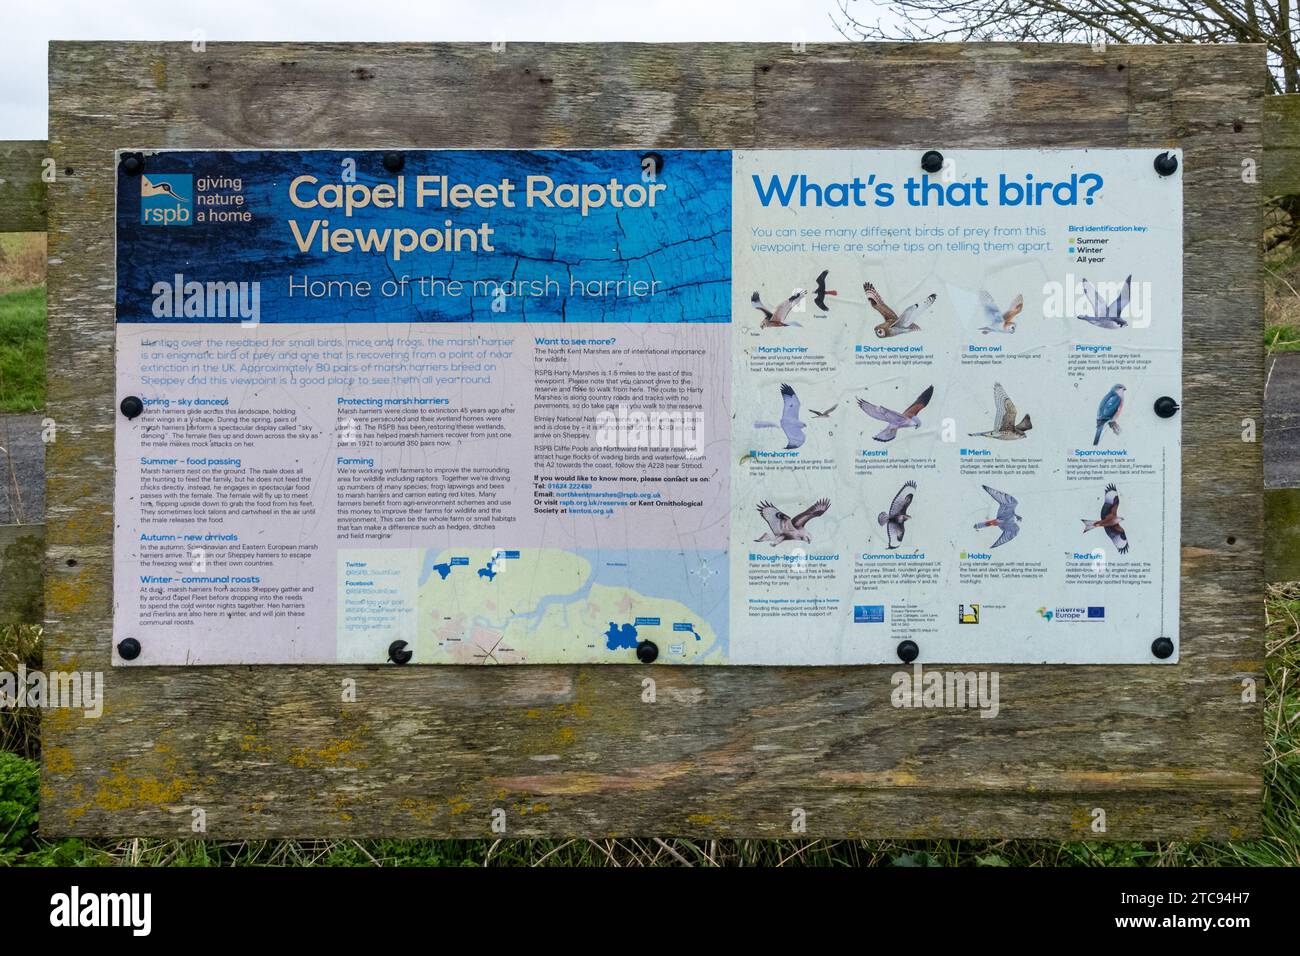 RSPB Capel Fleet Raptor Viewpoint, Isle of Sheppey, Kent, England, UK. Information board showing identification features of raptors (birds of prey) Stock Photo